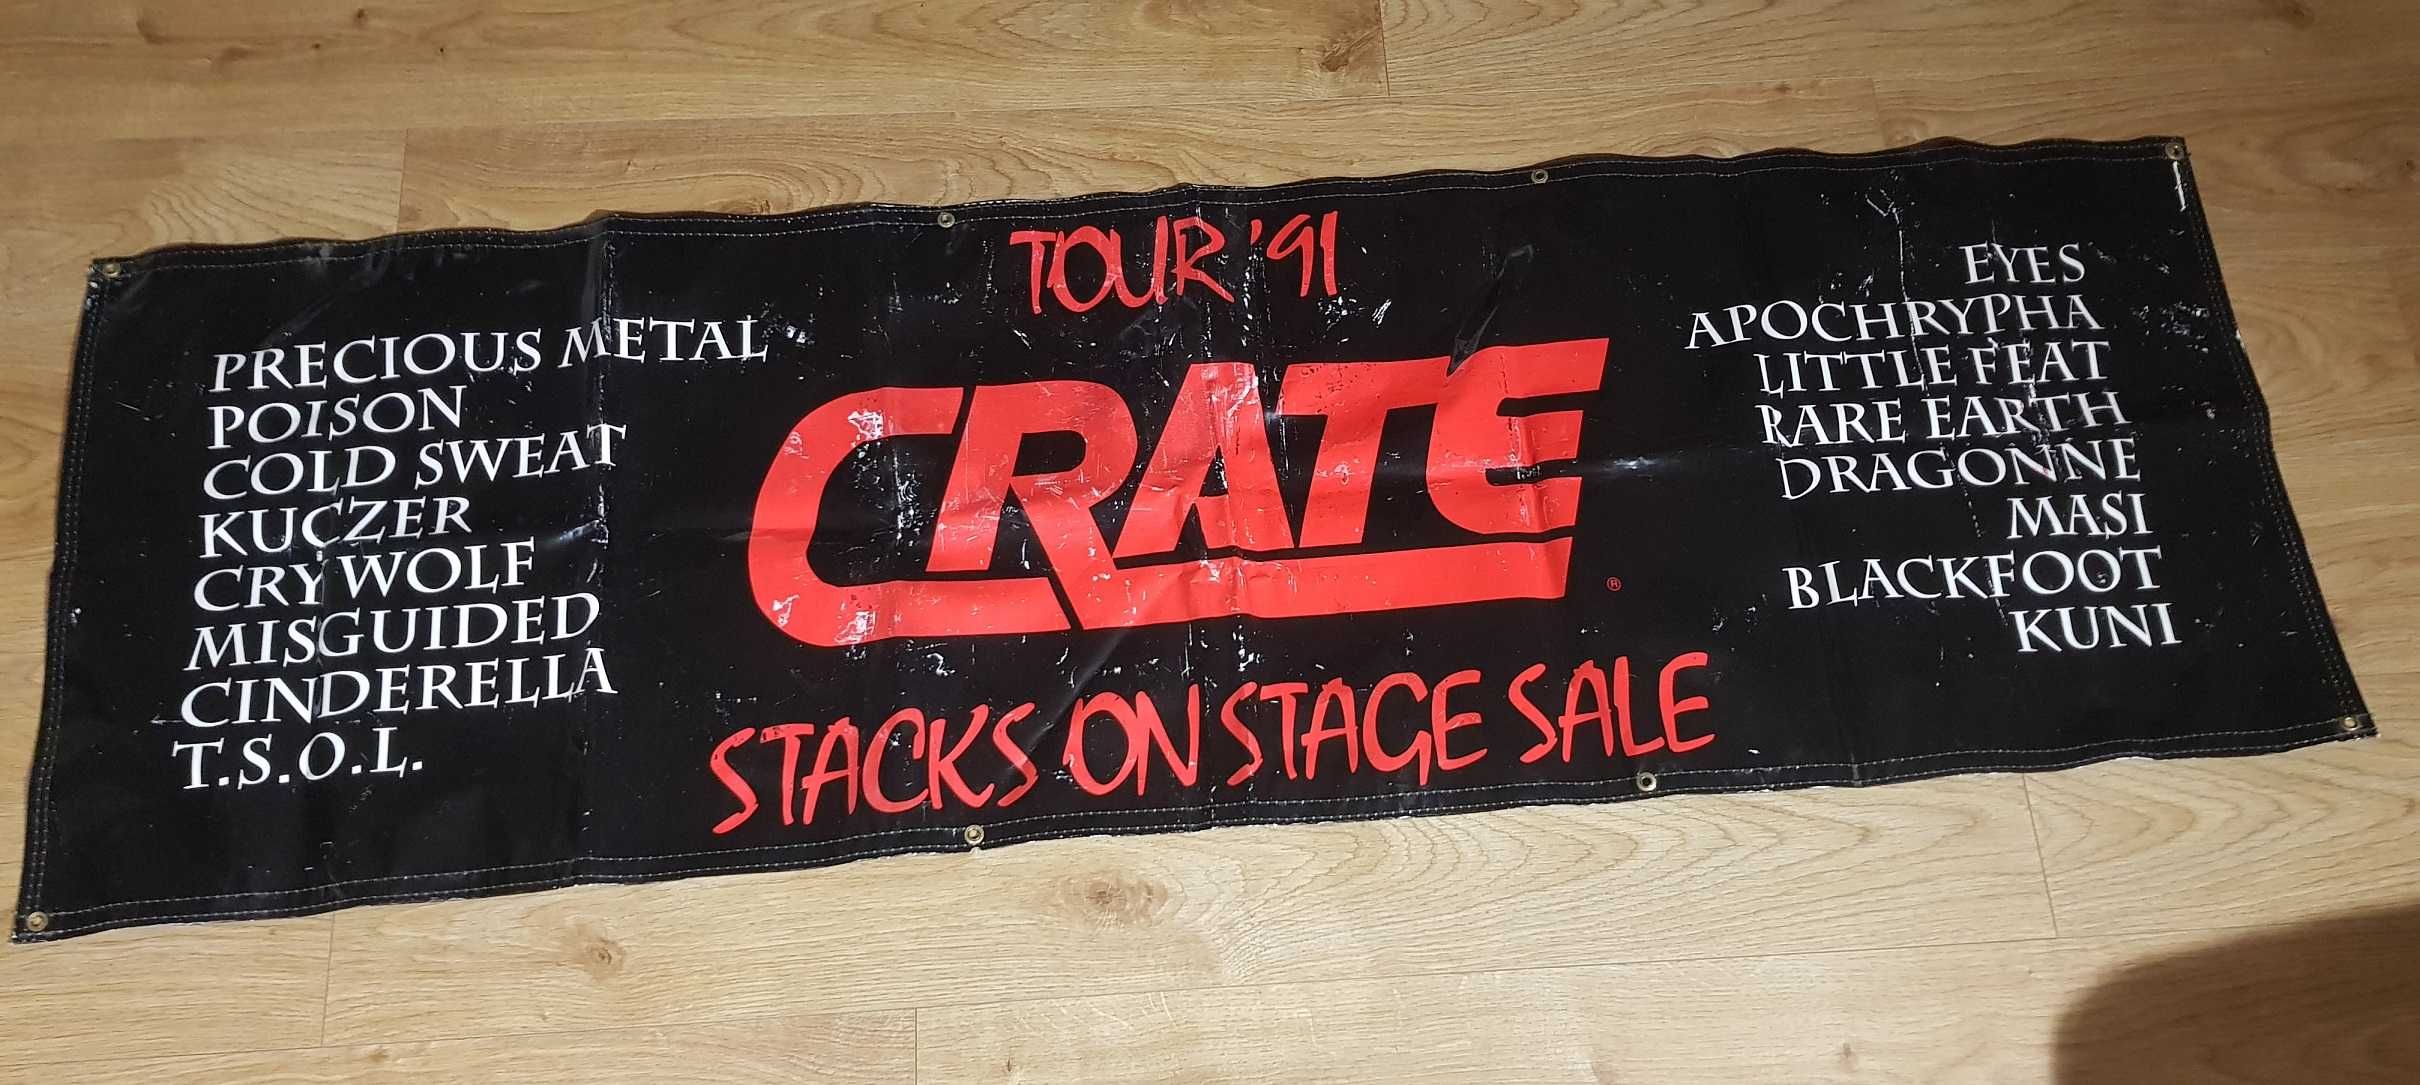 Baner Plakat CRATE amps Tour`91 zespoły Rock Metal